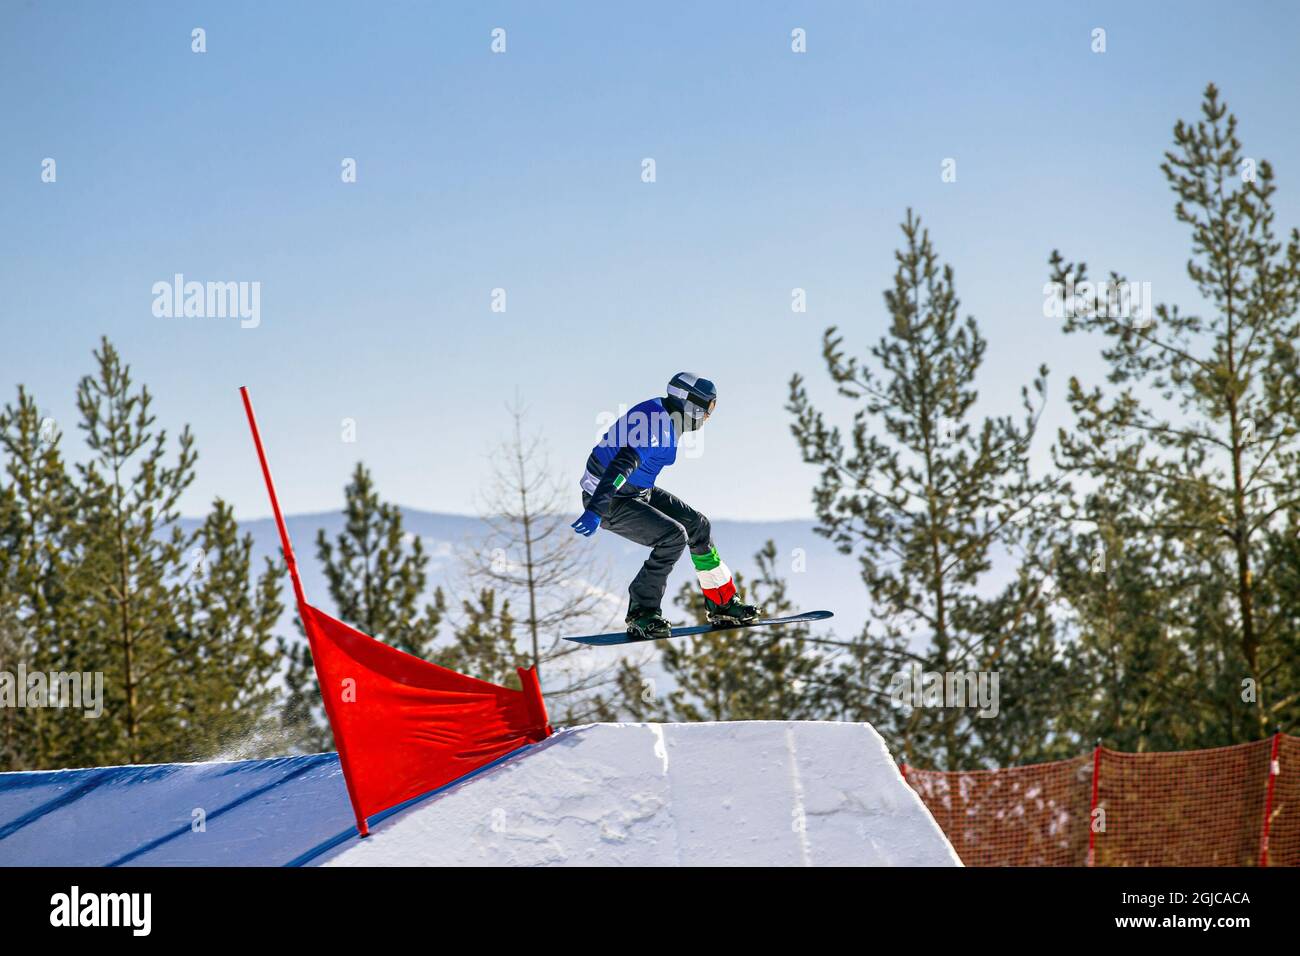 snowboarder Italian ski jump. snowboarding competition Stock Photo